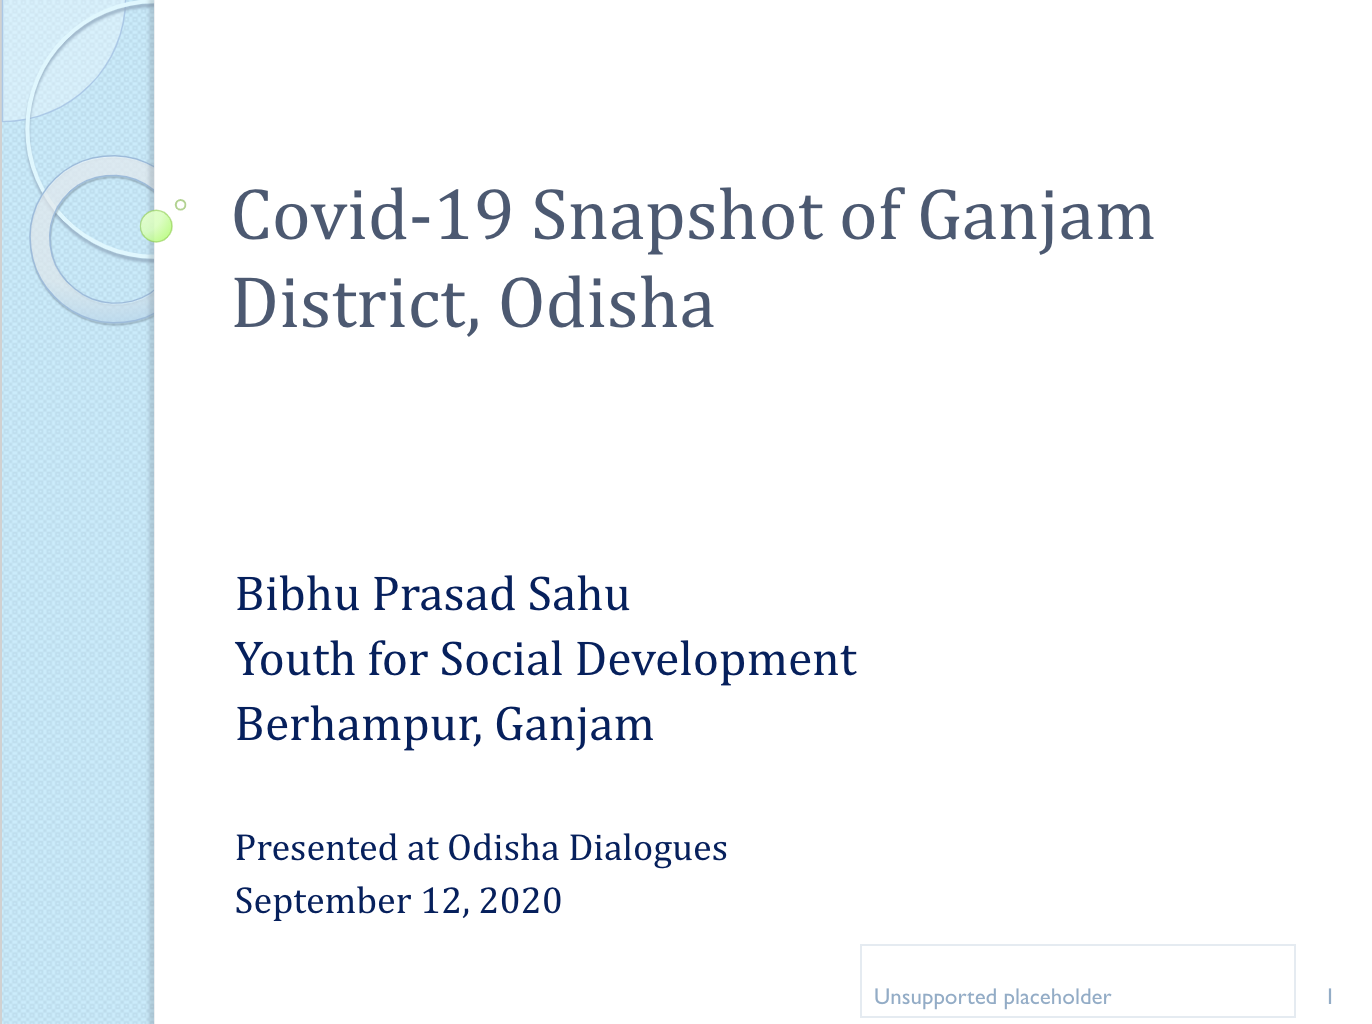 COVID-19 Snapshot of Ganjam District, Odisha by Bibhu Prasad Sahu, Youth for Social Development, Behrampur, Ganjam